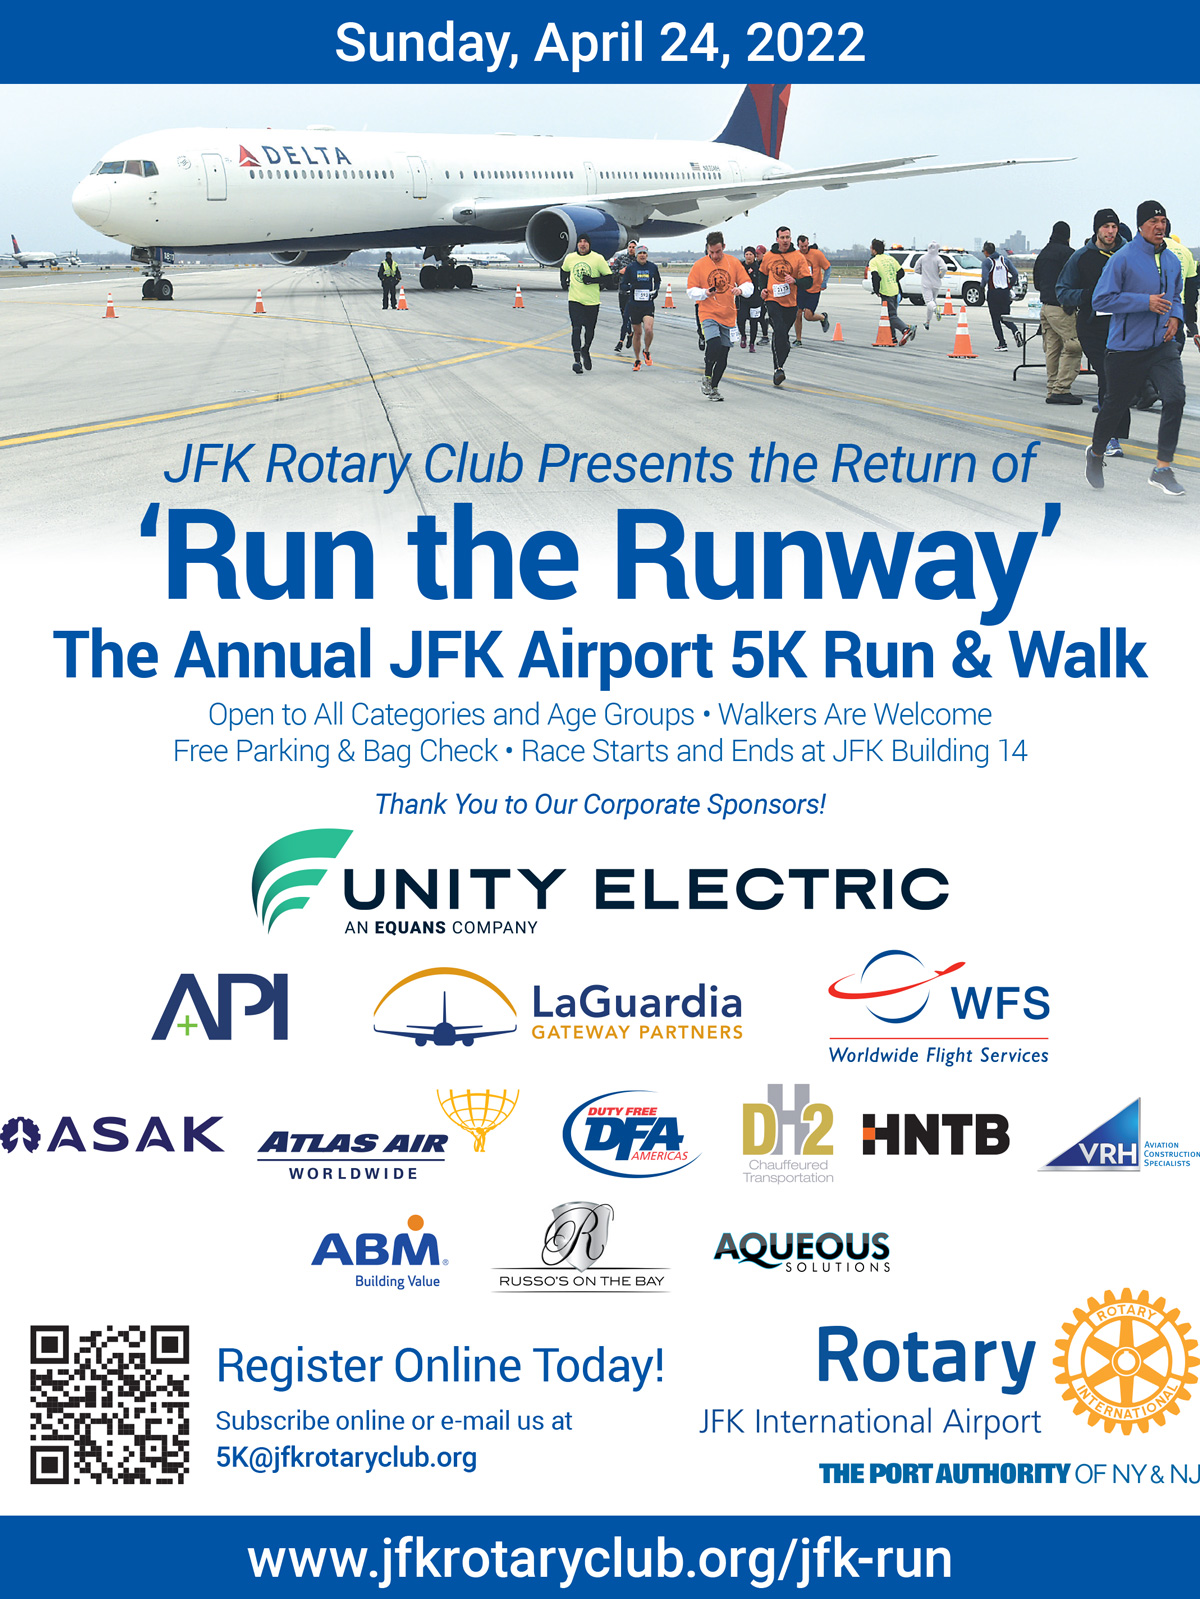 JKF International Airport Rotary Club